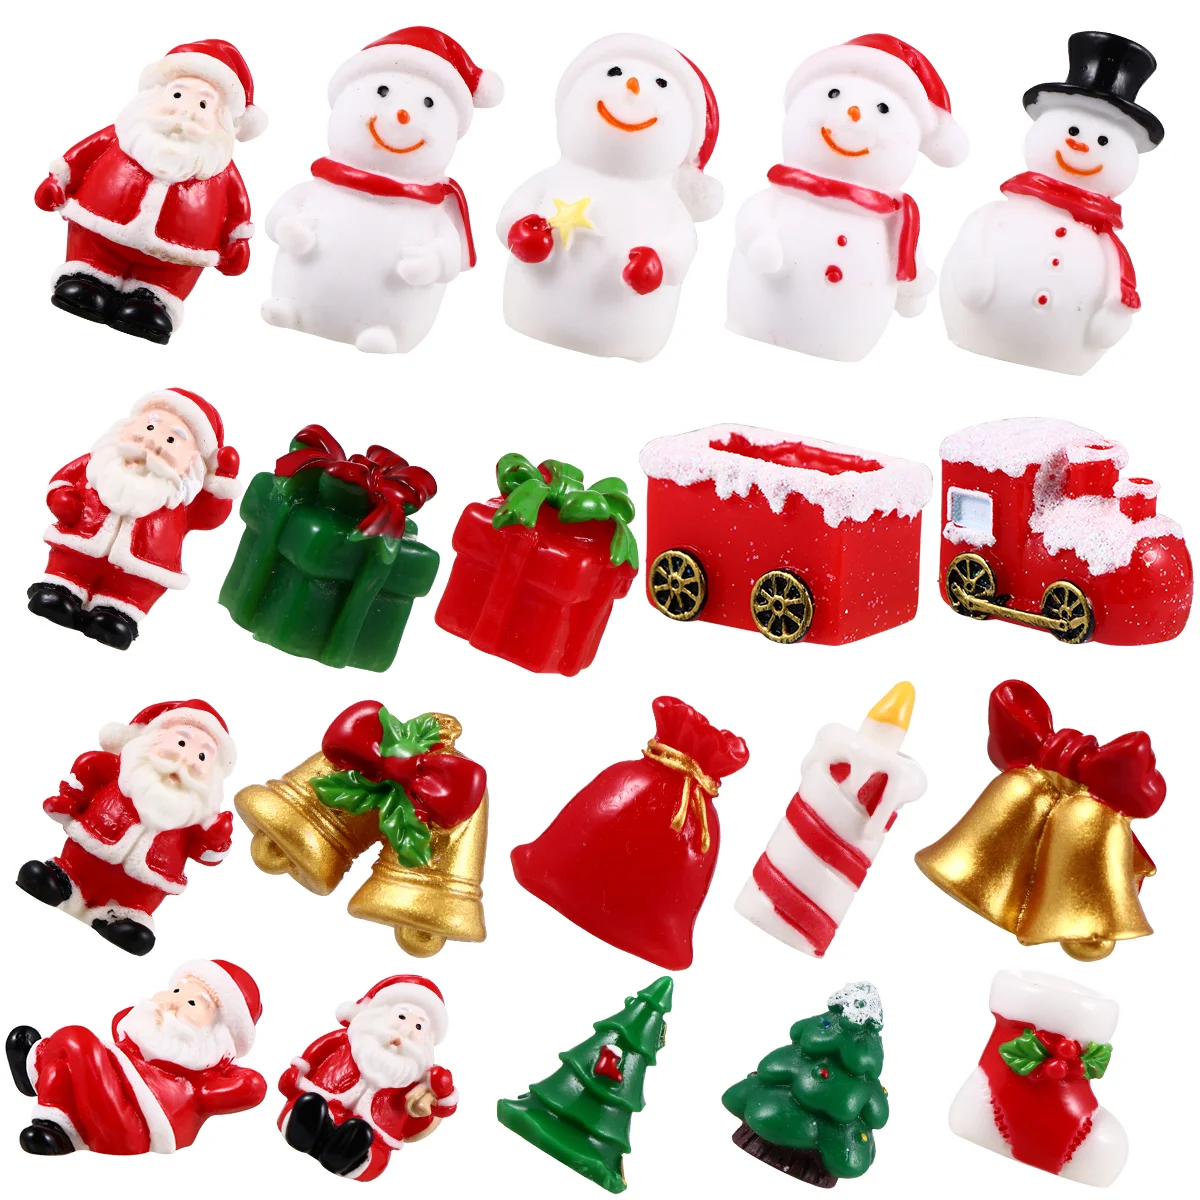 

Christmas Miniature Snowman Santa Claus Reindeer Figurines Micro Landscape Ornament Xmas Tree Figurines(Random Patterns)